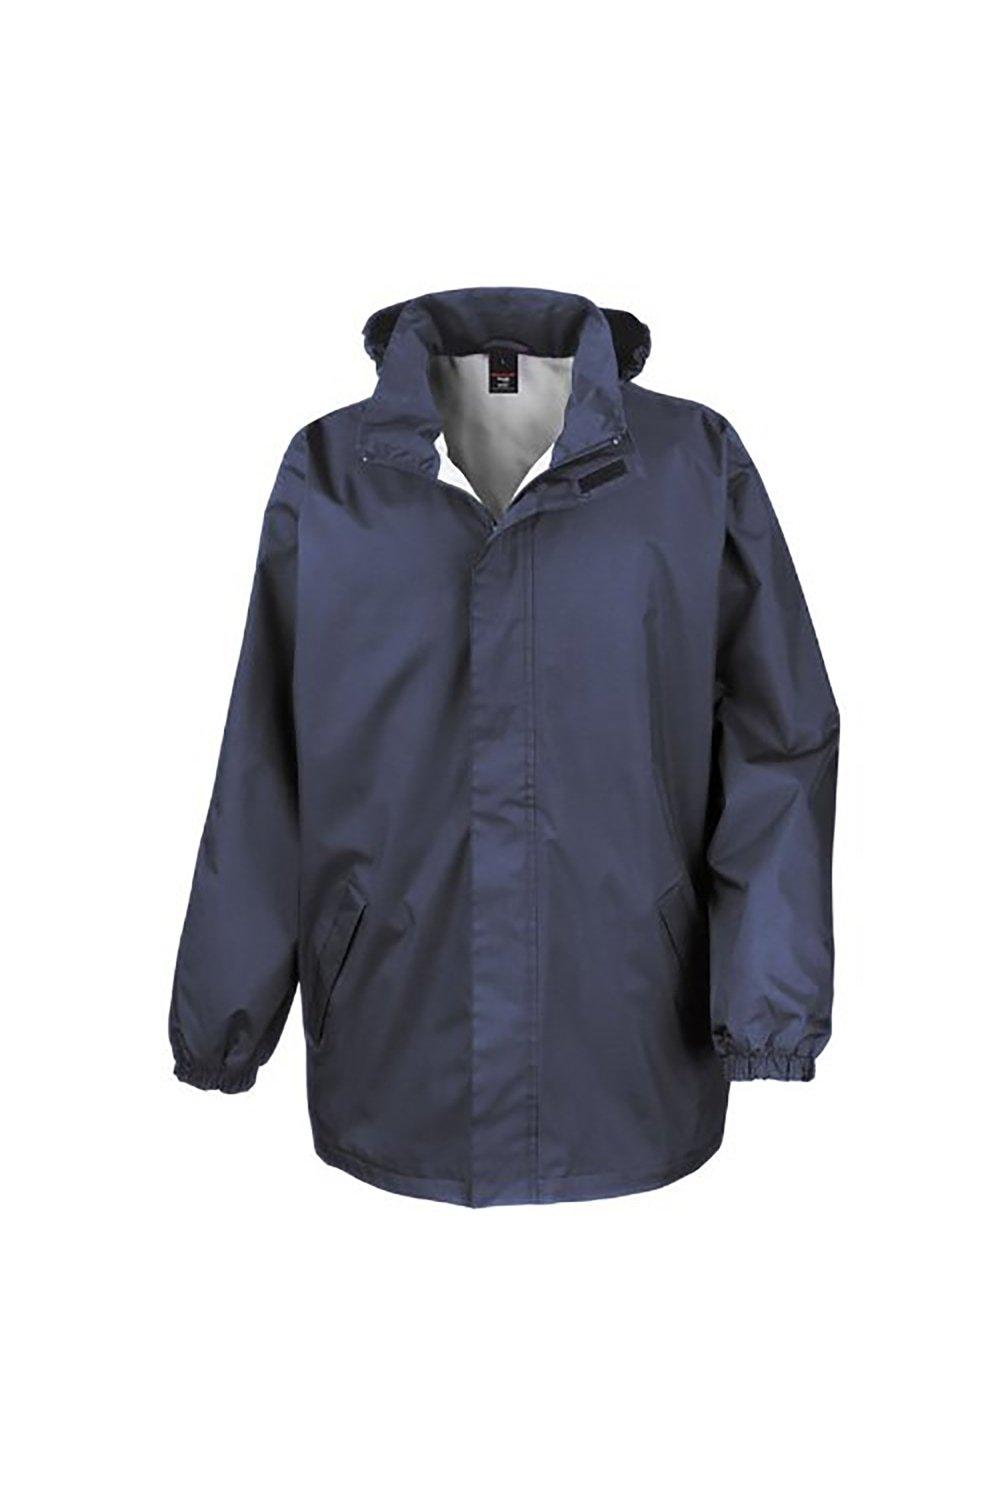 Водонепроницаемая ветрозащитная куртка средней плотности Core Result, темно-синий куртка didriksons демисезон лето средней длины силуэт трапеция водонепроницаемая ветрозащитная размер 40 бежевый